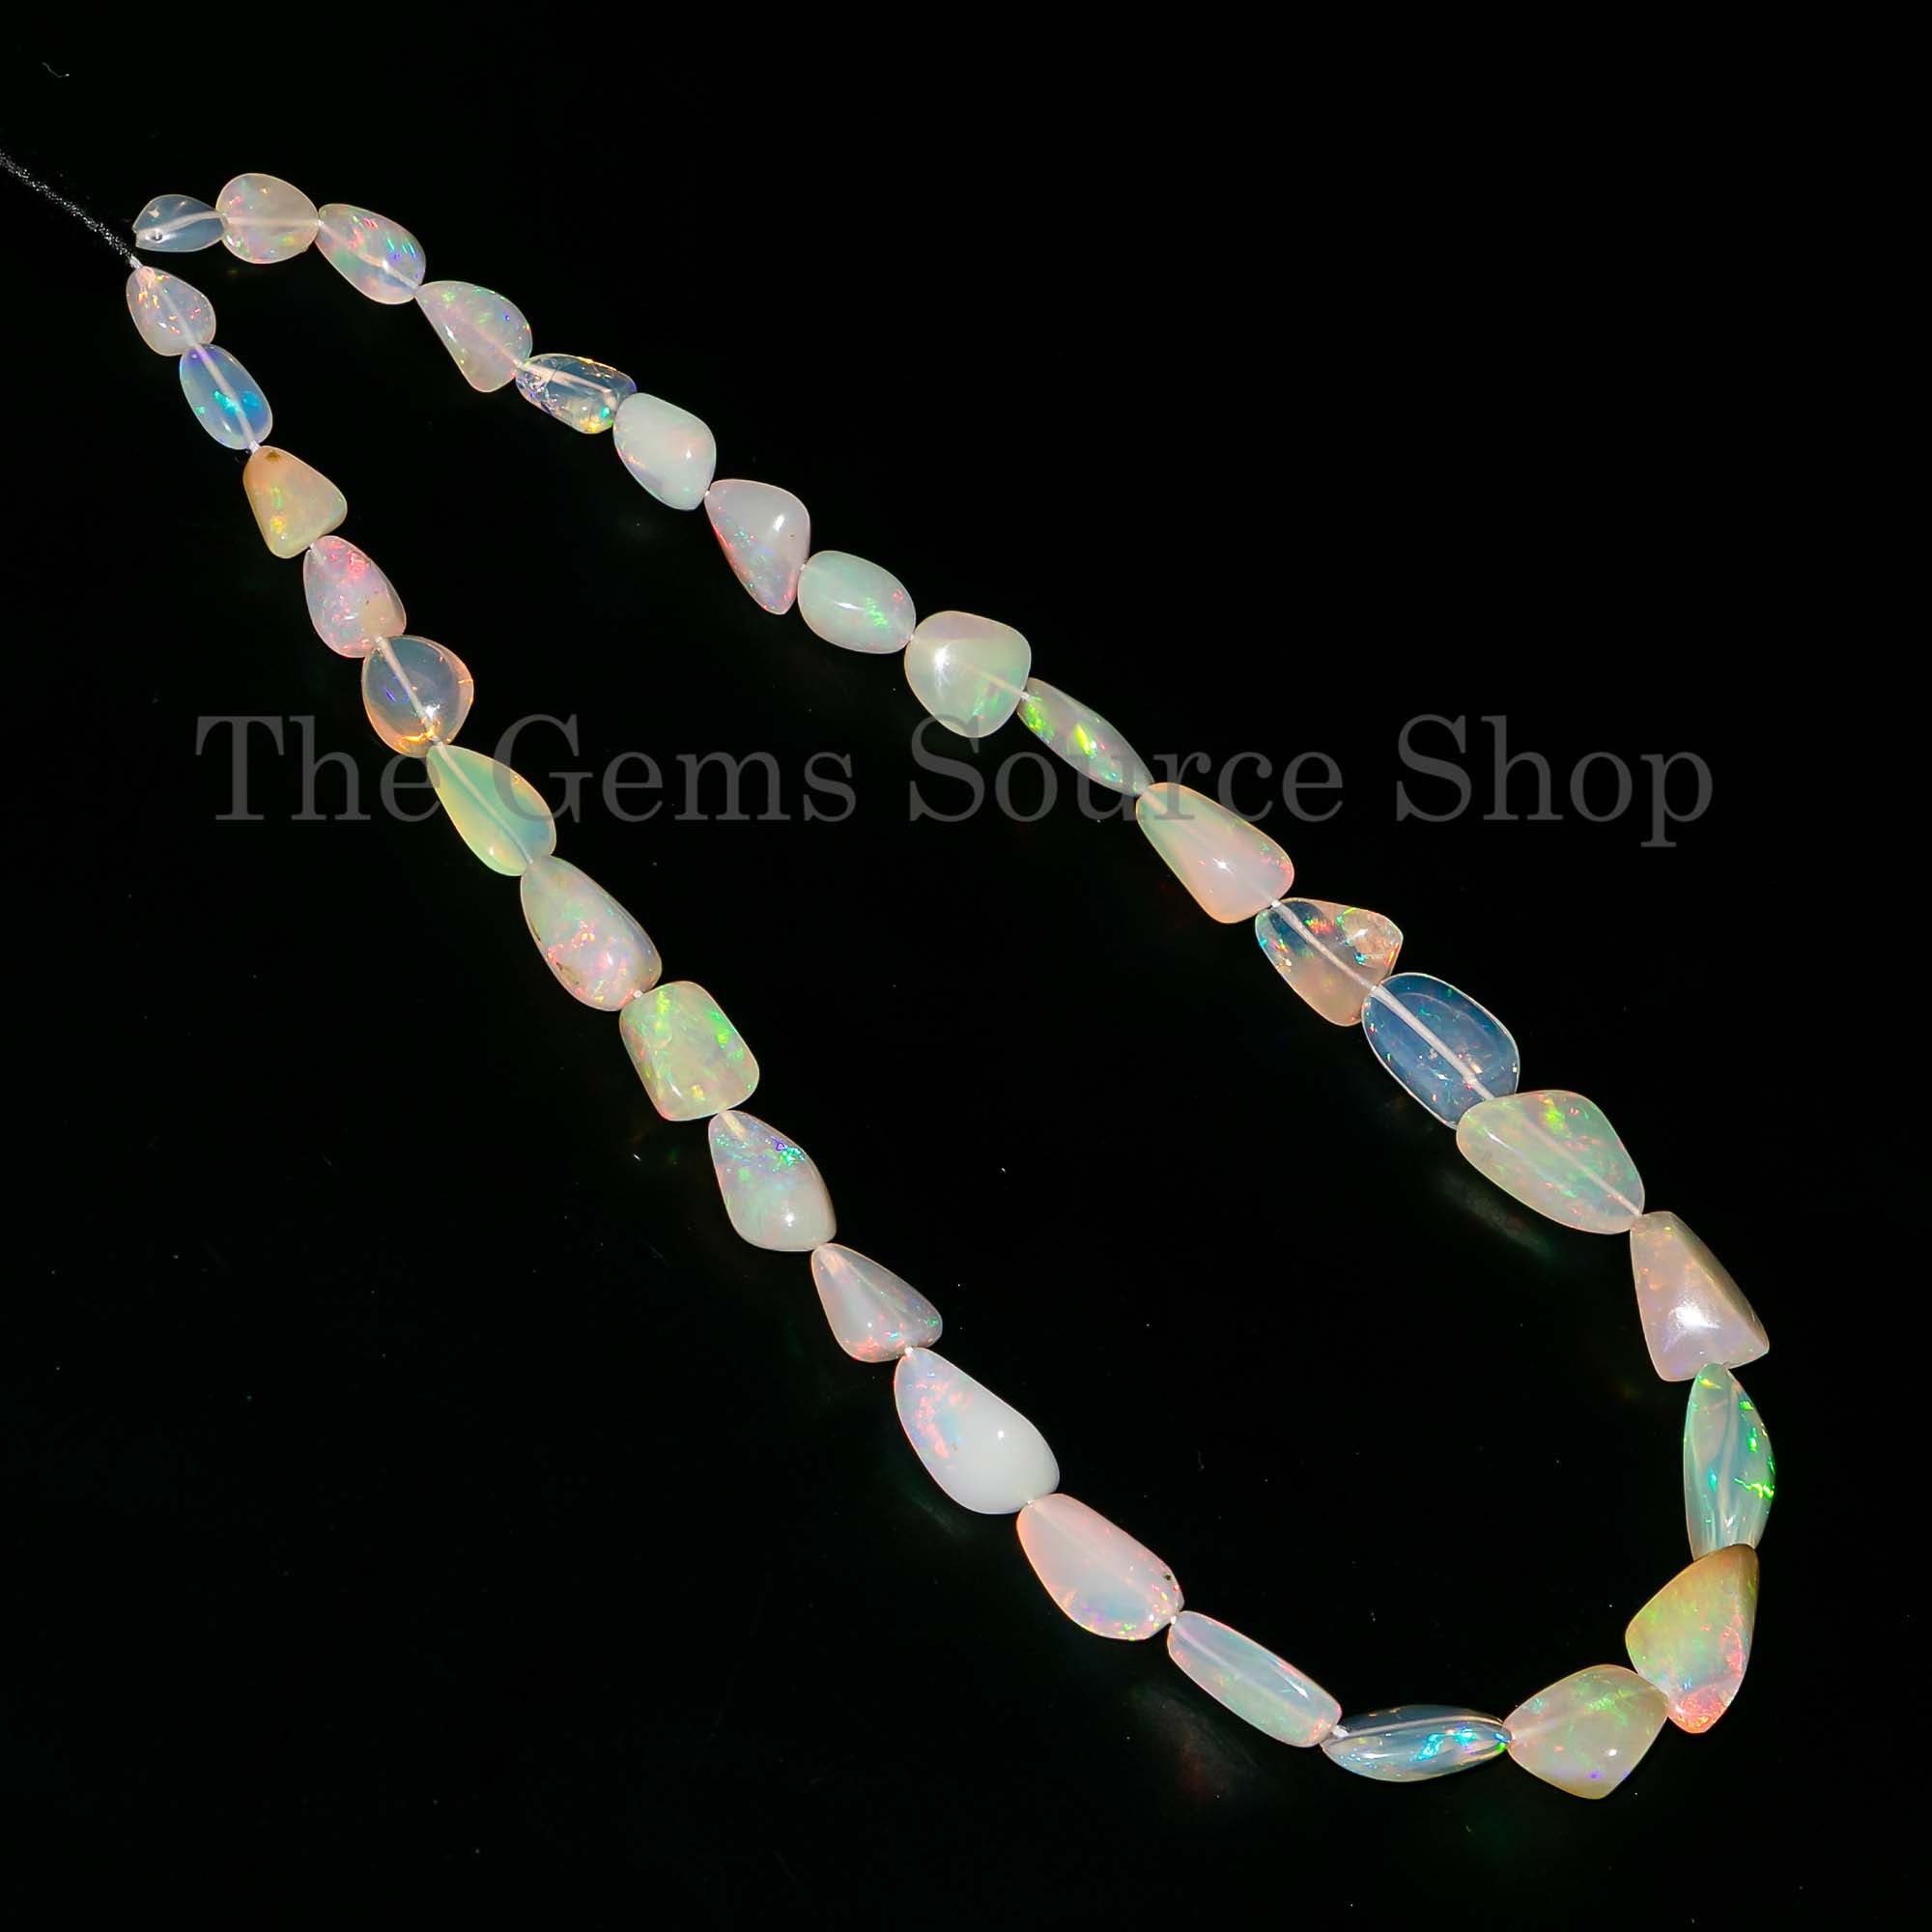 Ethiopian Opal Plain Nugget Beads, Ethiopian Opal Beads, Opal Beads, Ethiopian Opal Gemstone